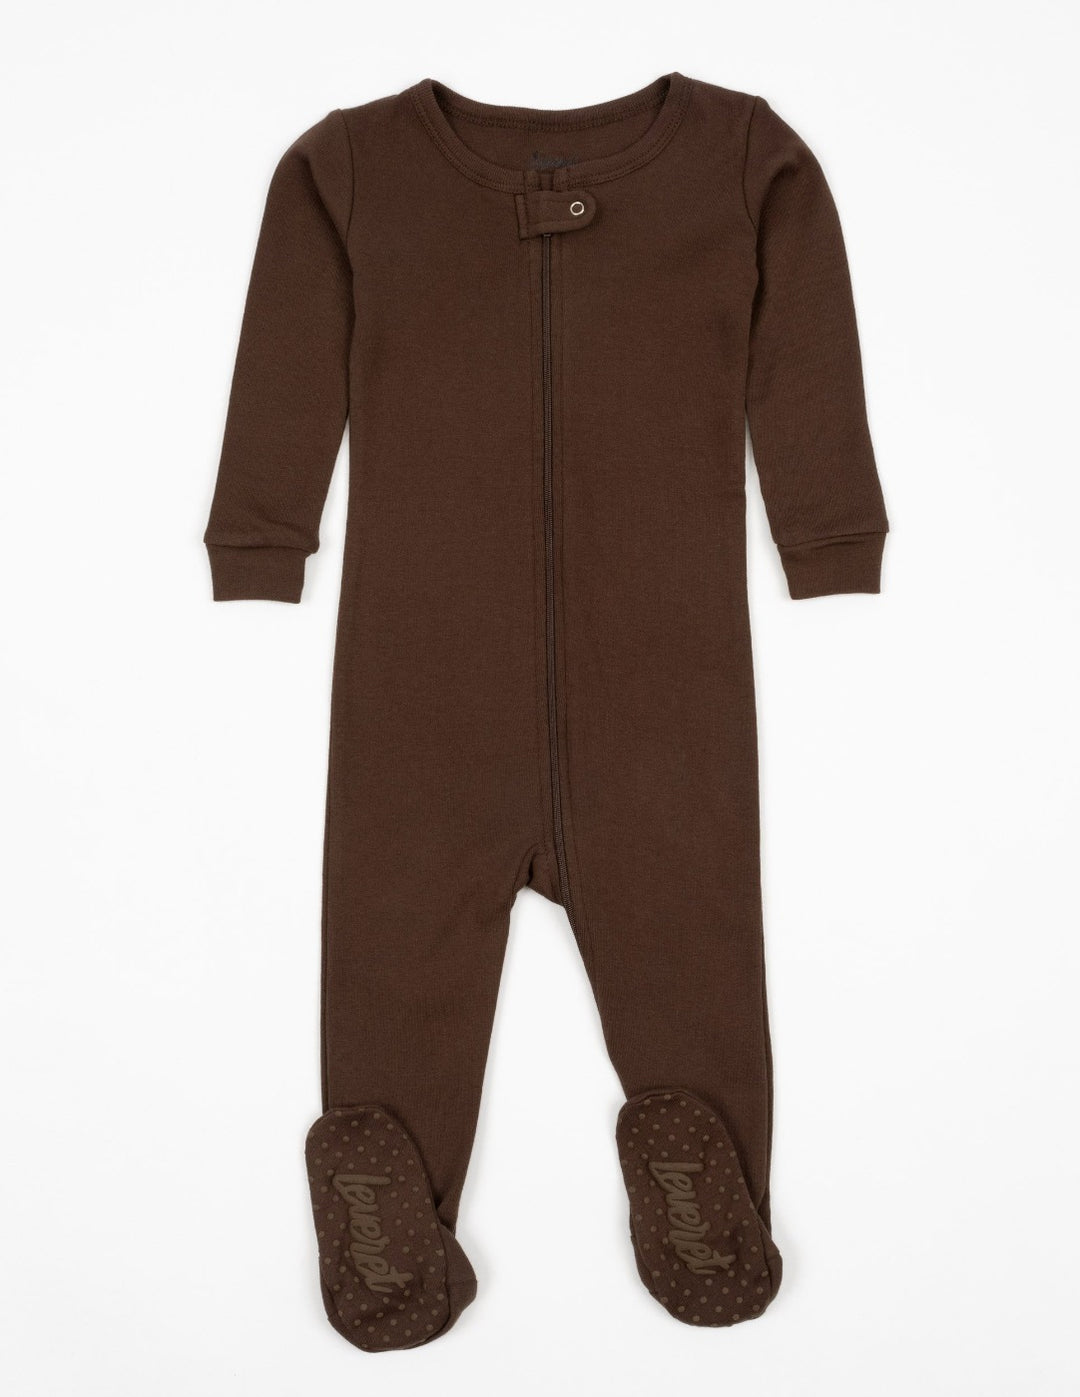 brown baby footed pajamas